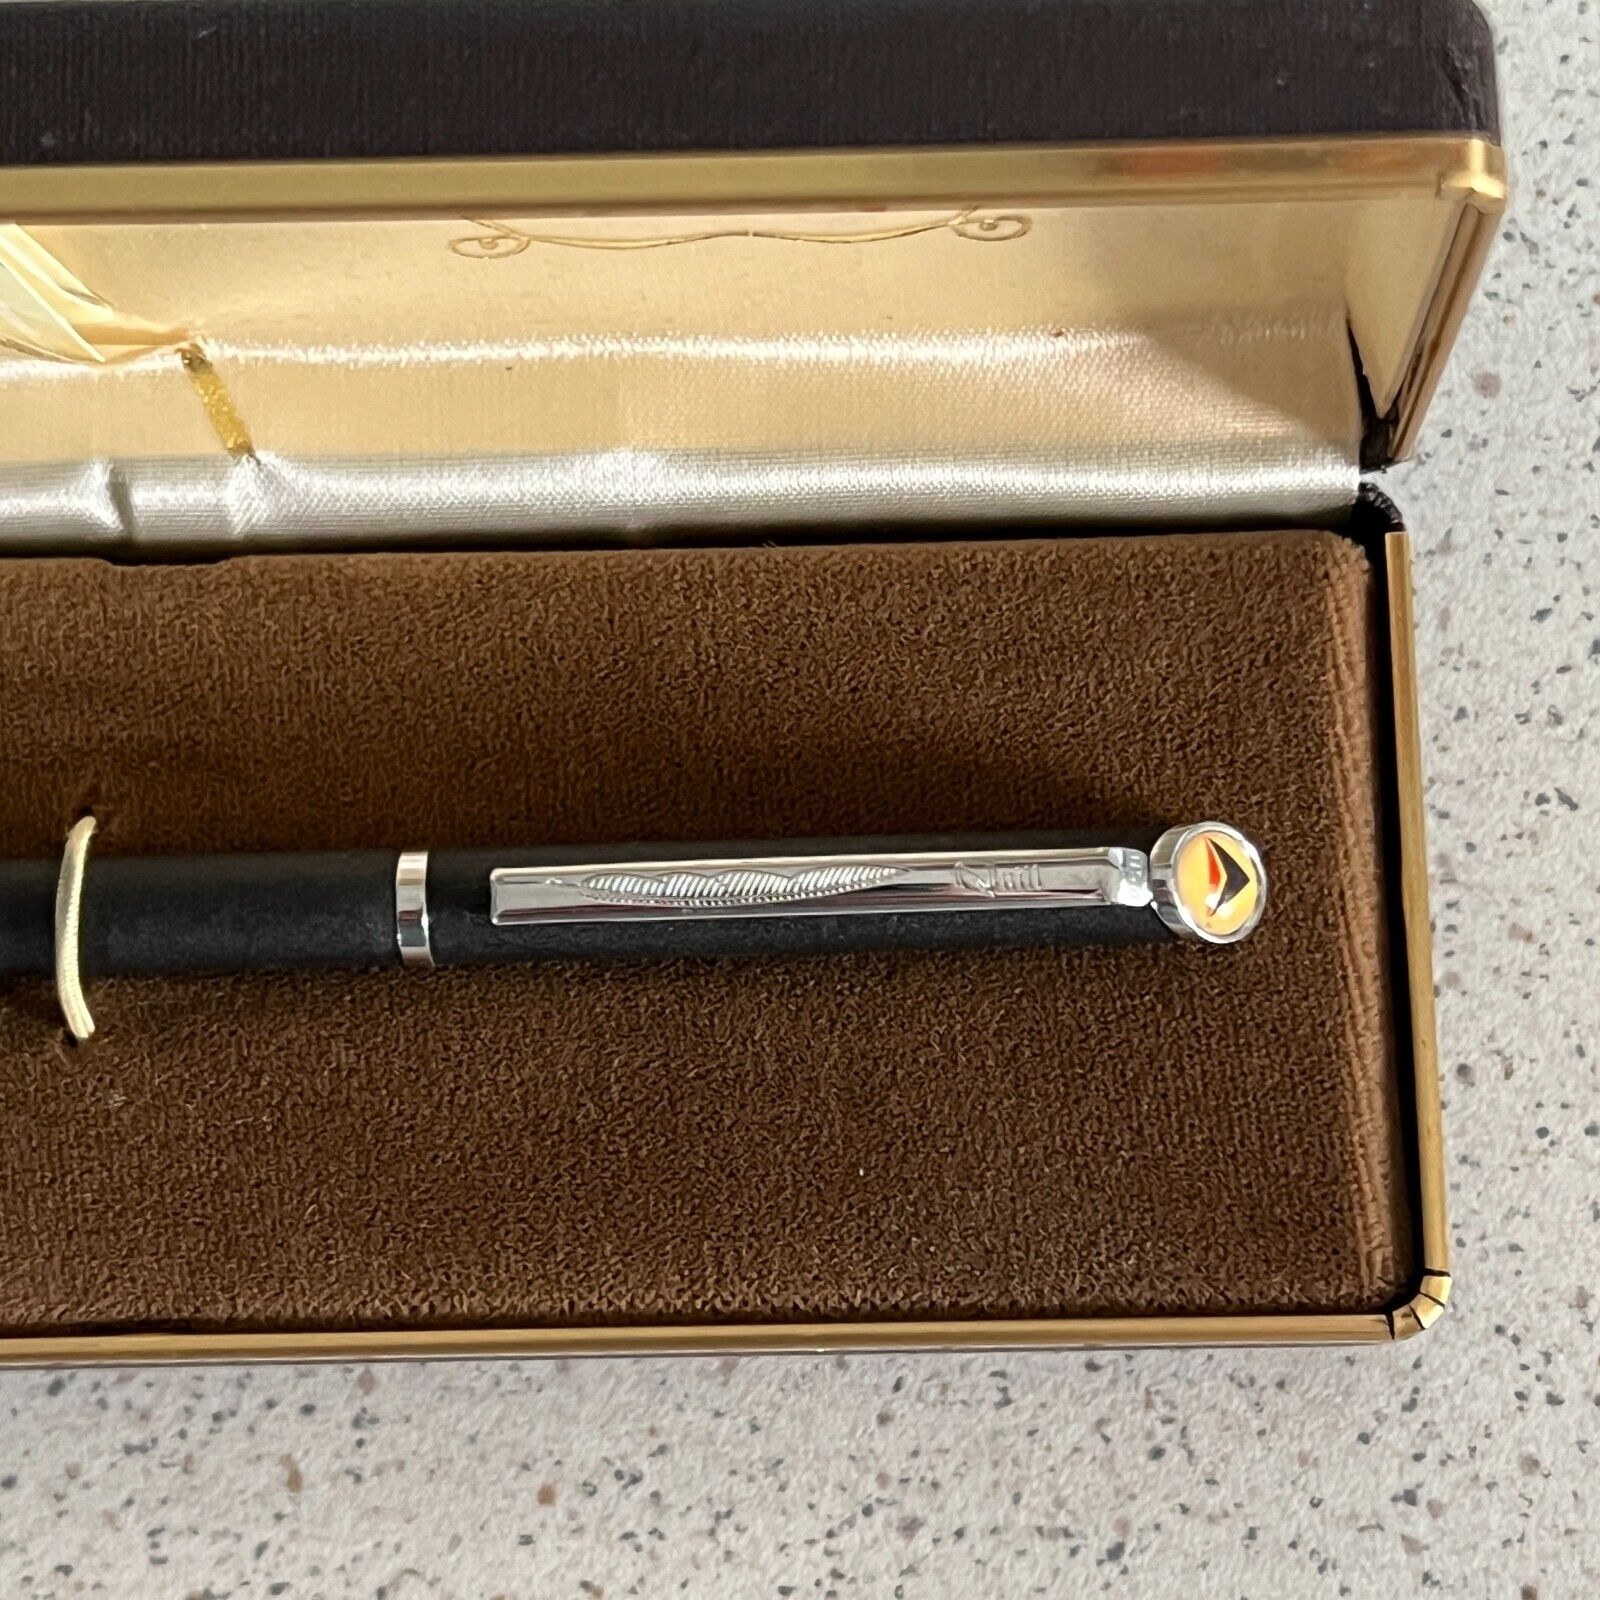 Delta Airlines Employee Award Pen Vintage Quill Ballpoint Pen Black Silver